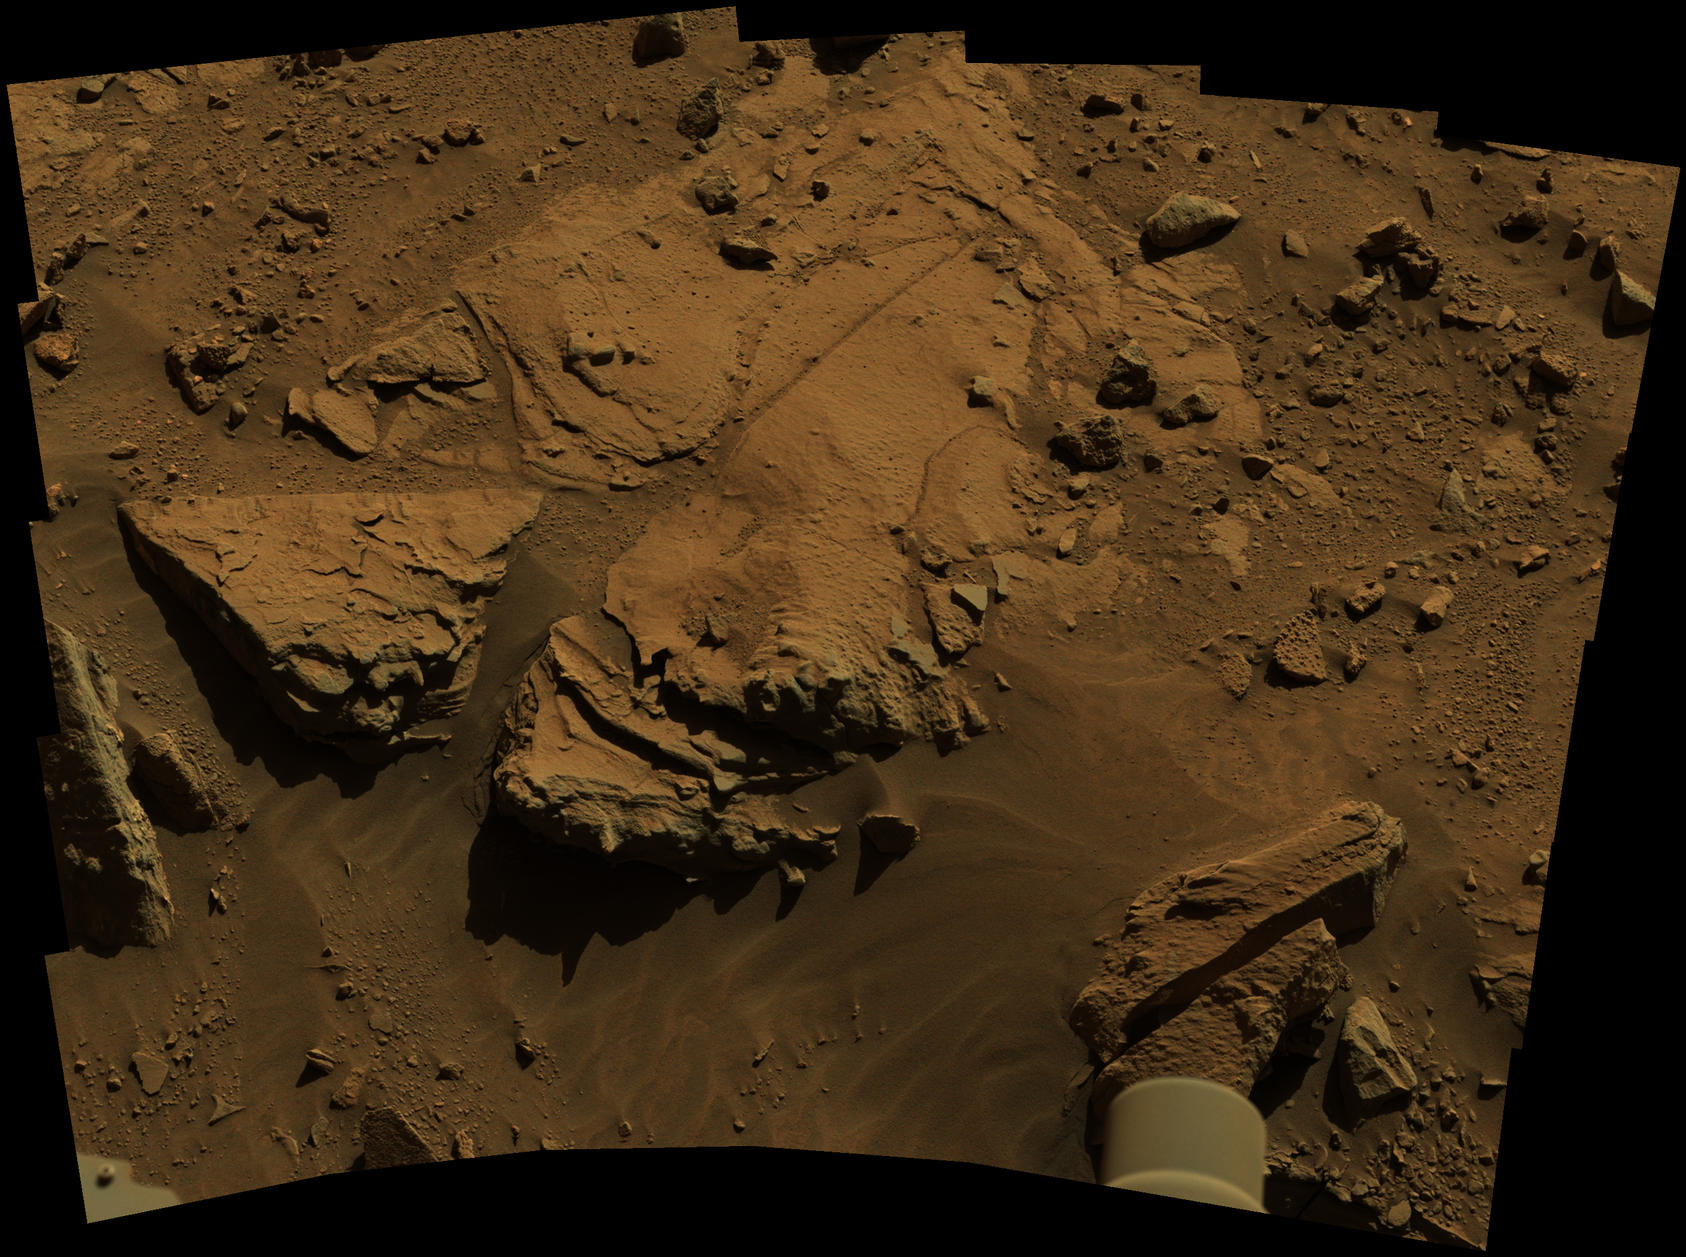 Sandstone Target 'Windjana' May Be Next Martian Drilling Site - RAW